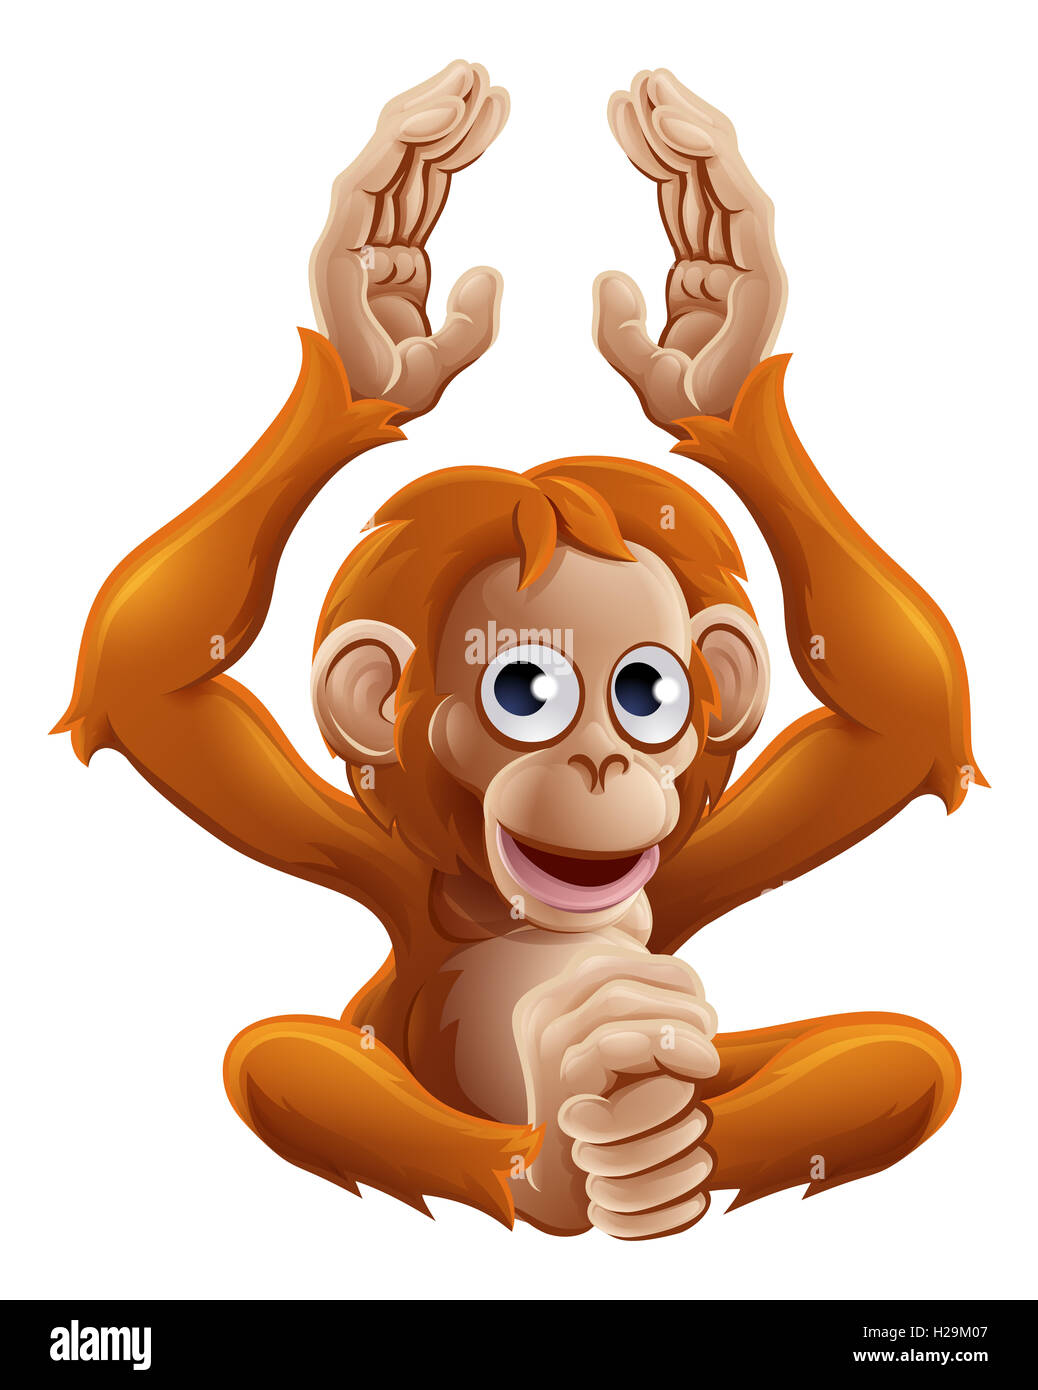 A cute cartoon orangutan ape monkey animal character Stock Photo - Alamy